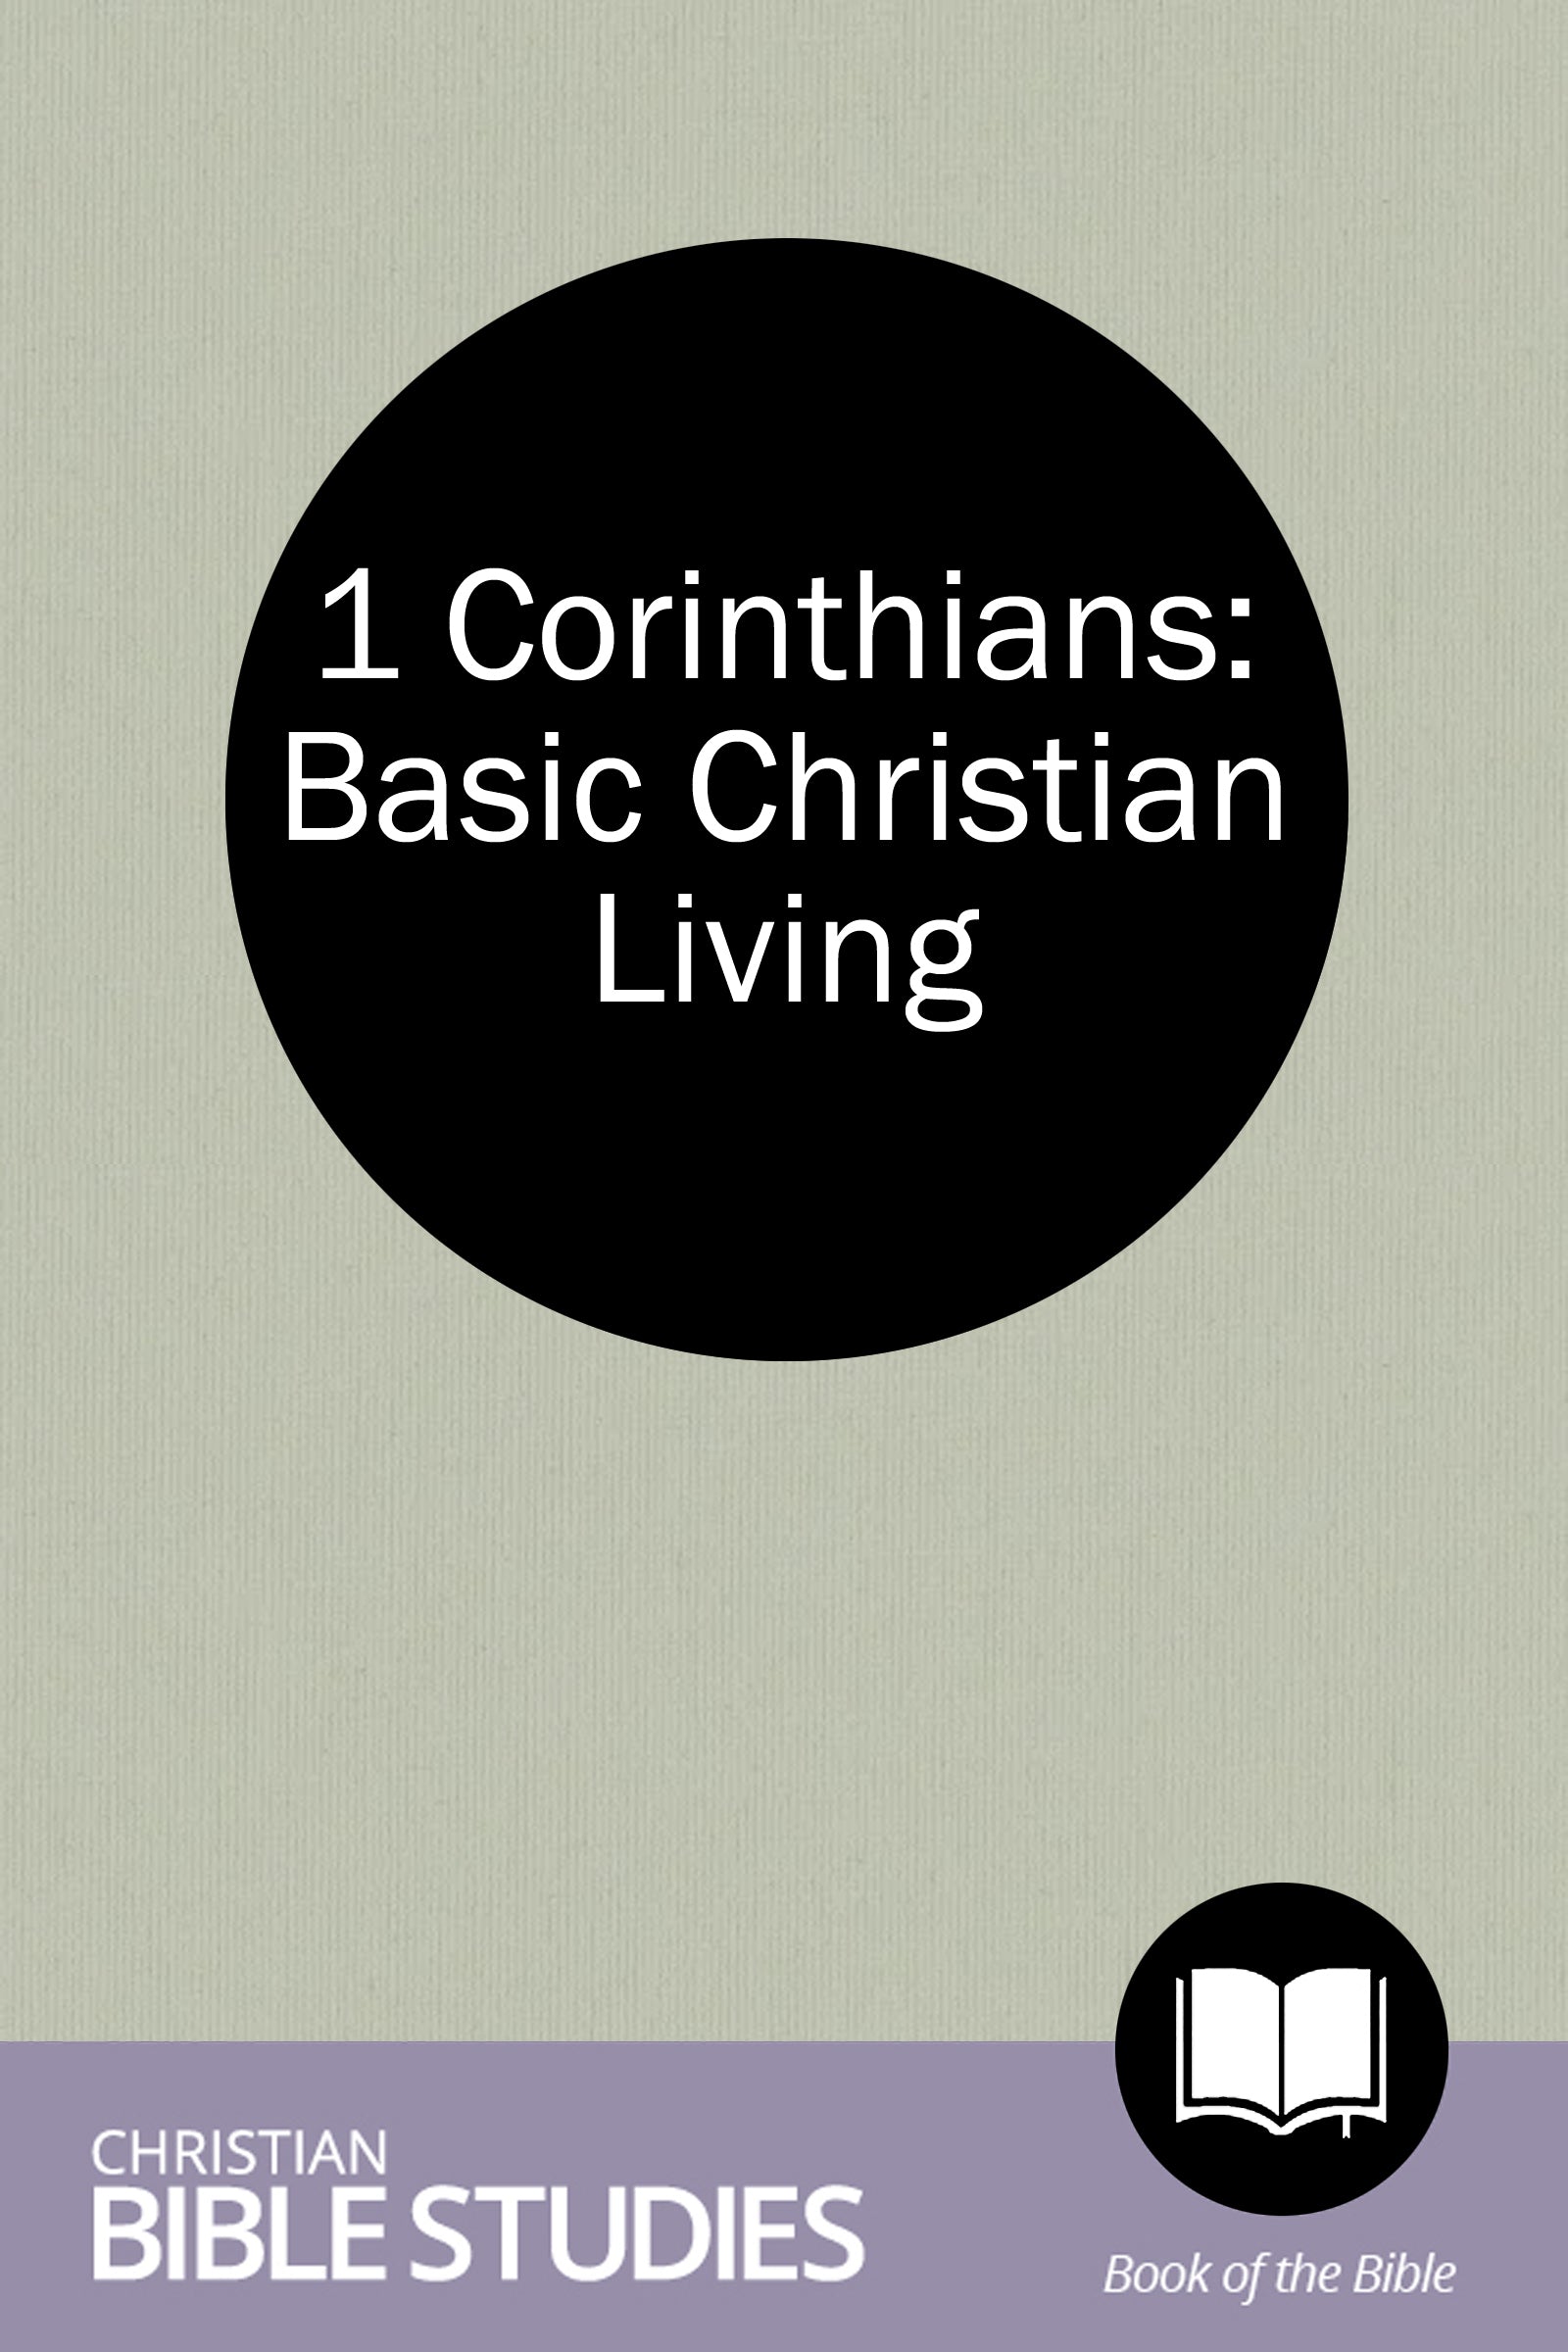 1 Corinthians: Basic Christian Living